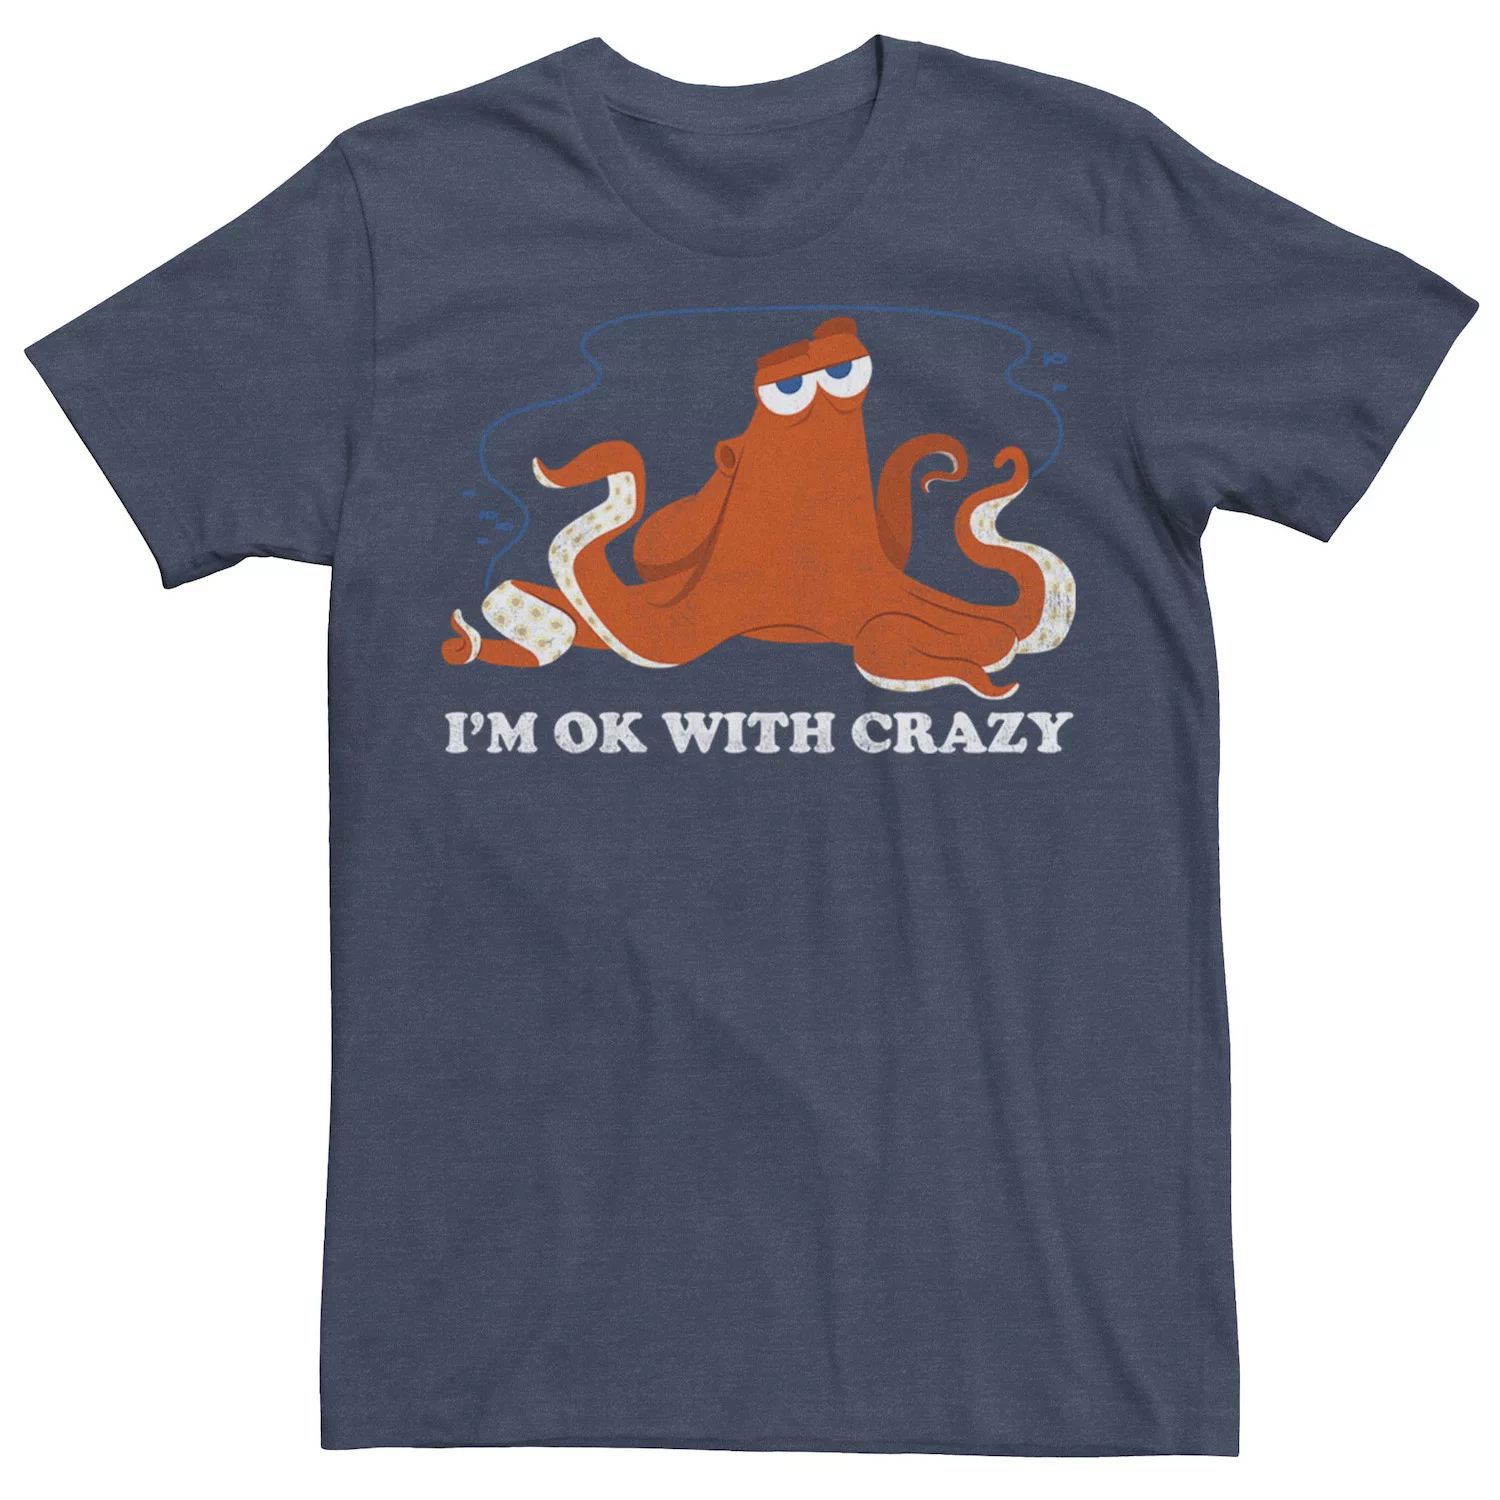 Мужская футболка Finding Dory Hank Ok Crazy Disney / Pixar мужская футболка finding dory hank ok с crazy tee disney pixar